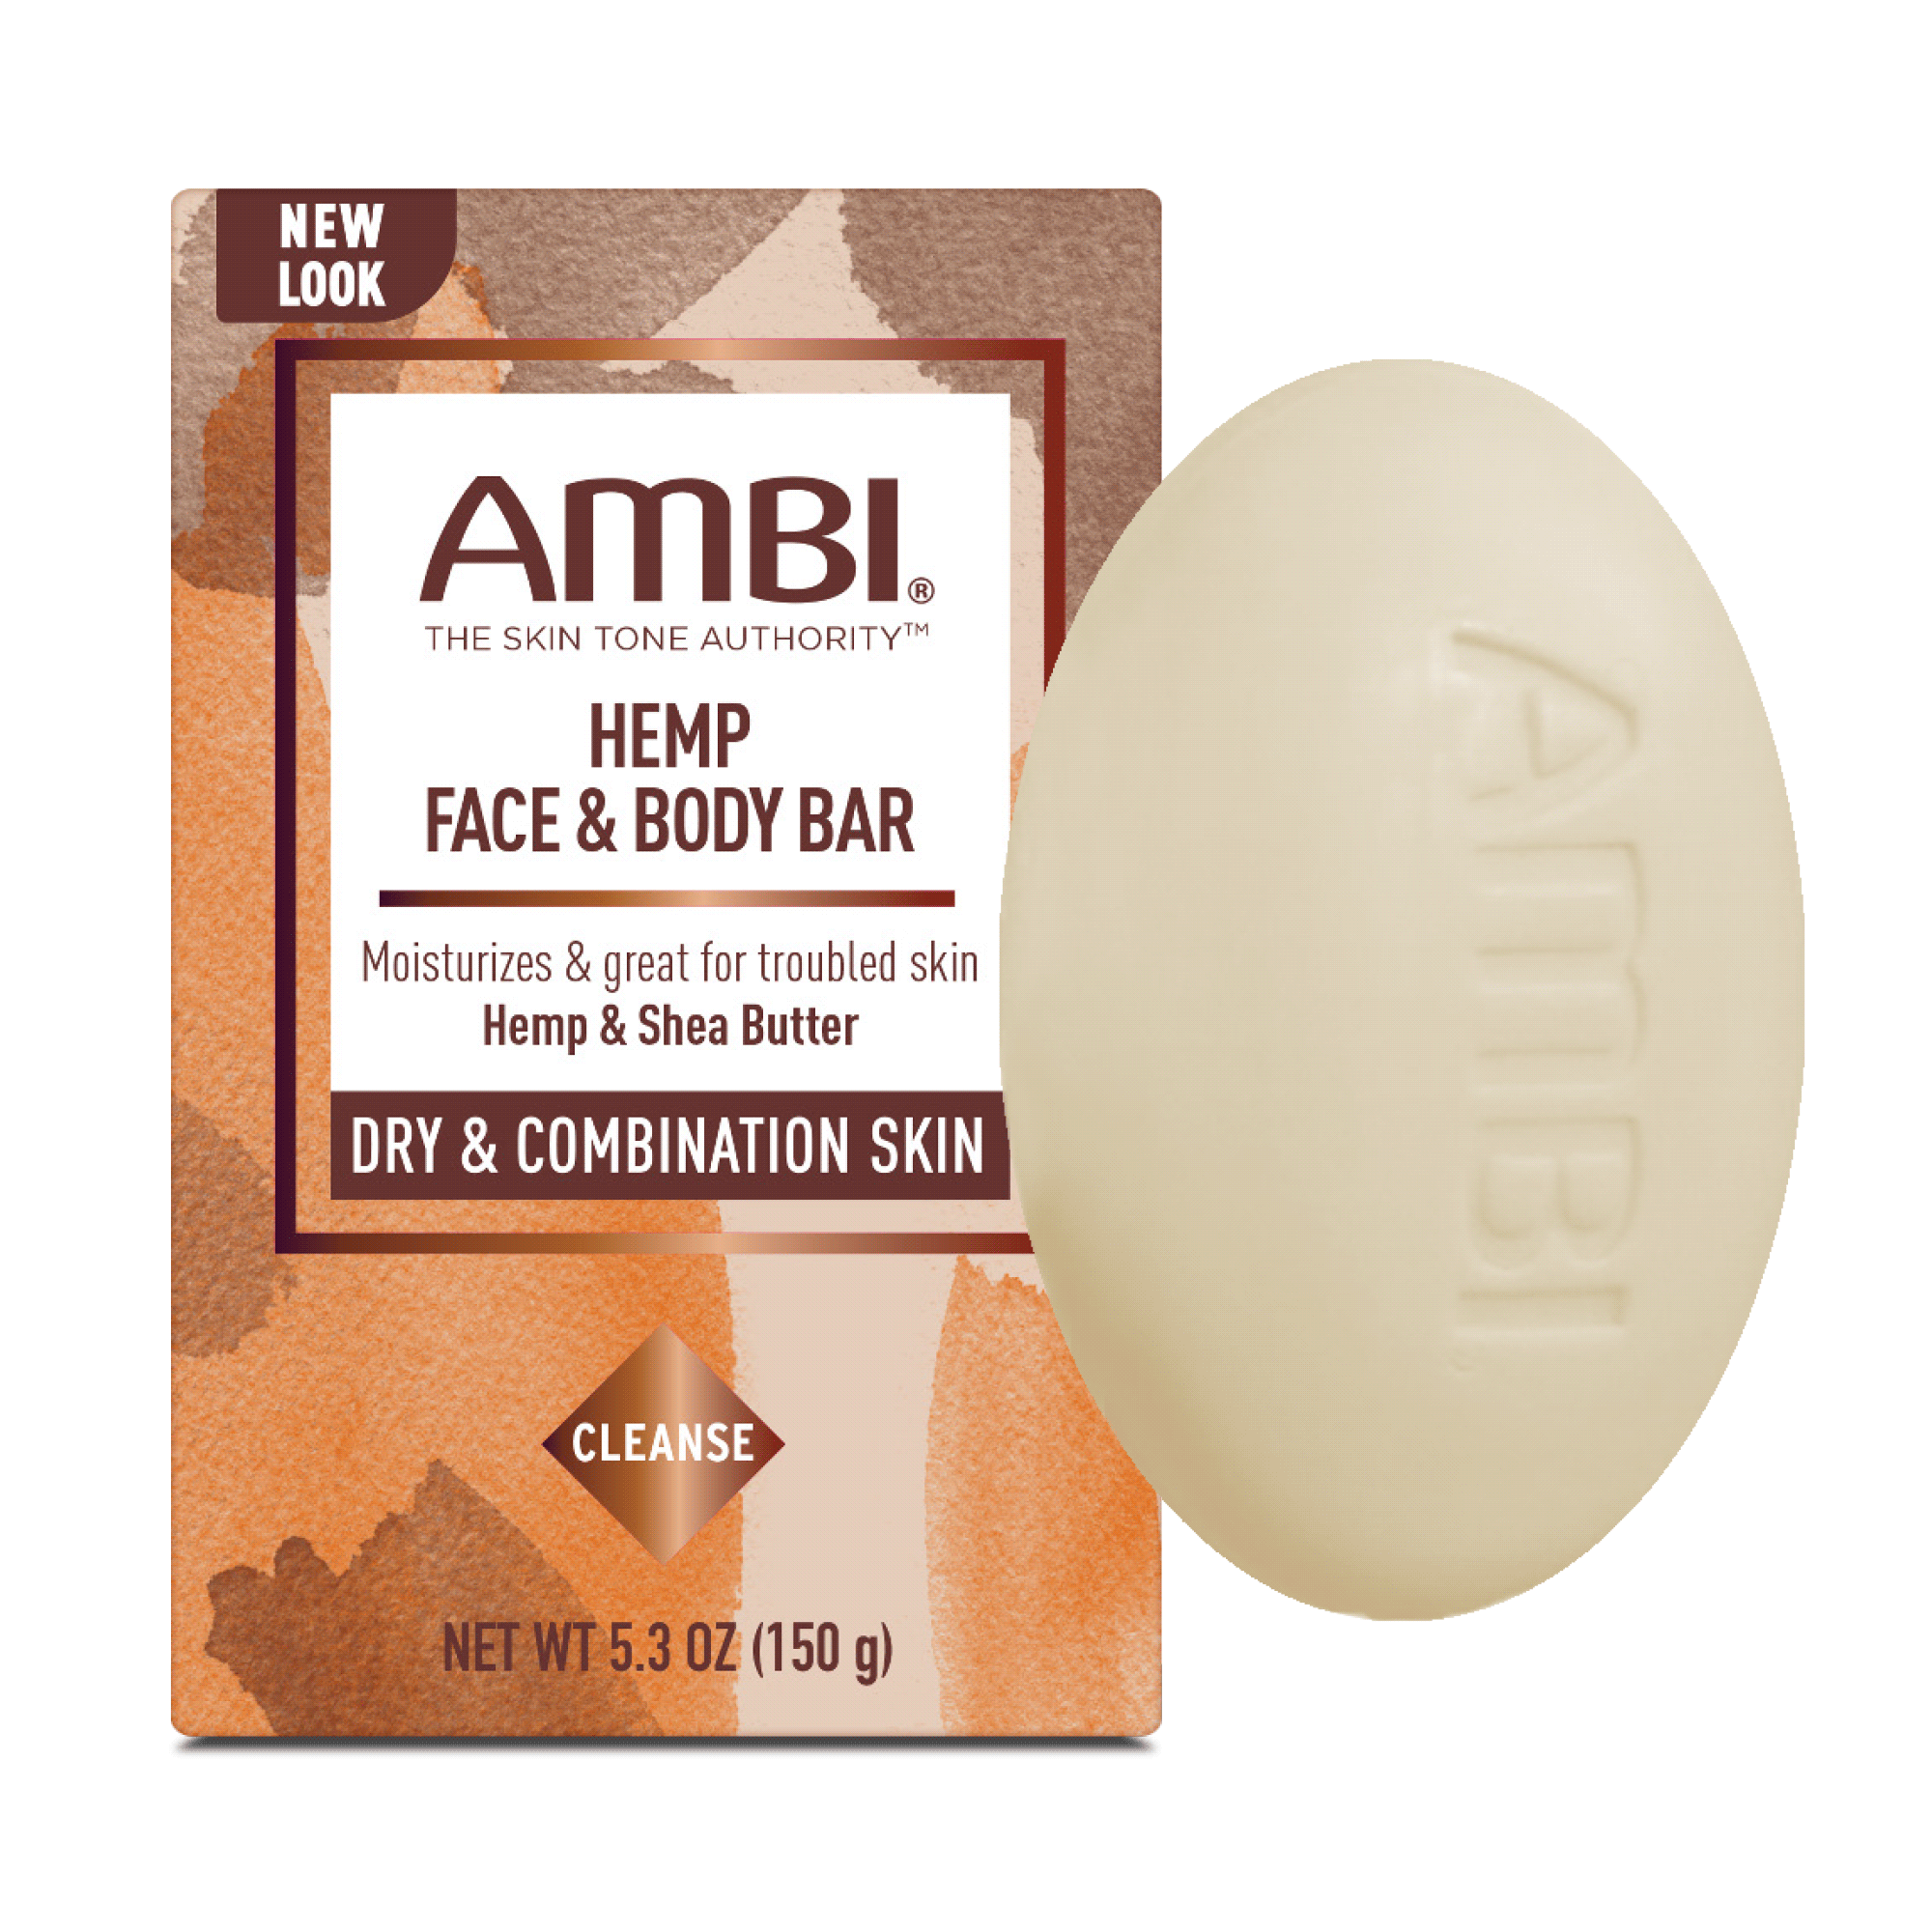 NEW! AMBI Hemp Face & Body Bar